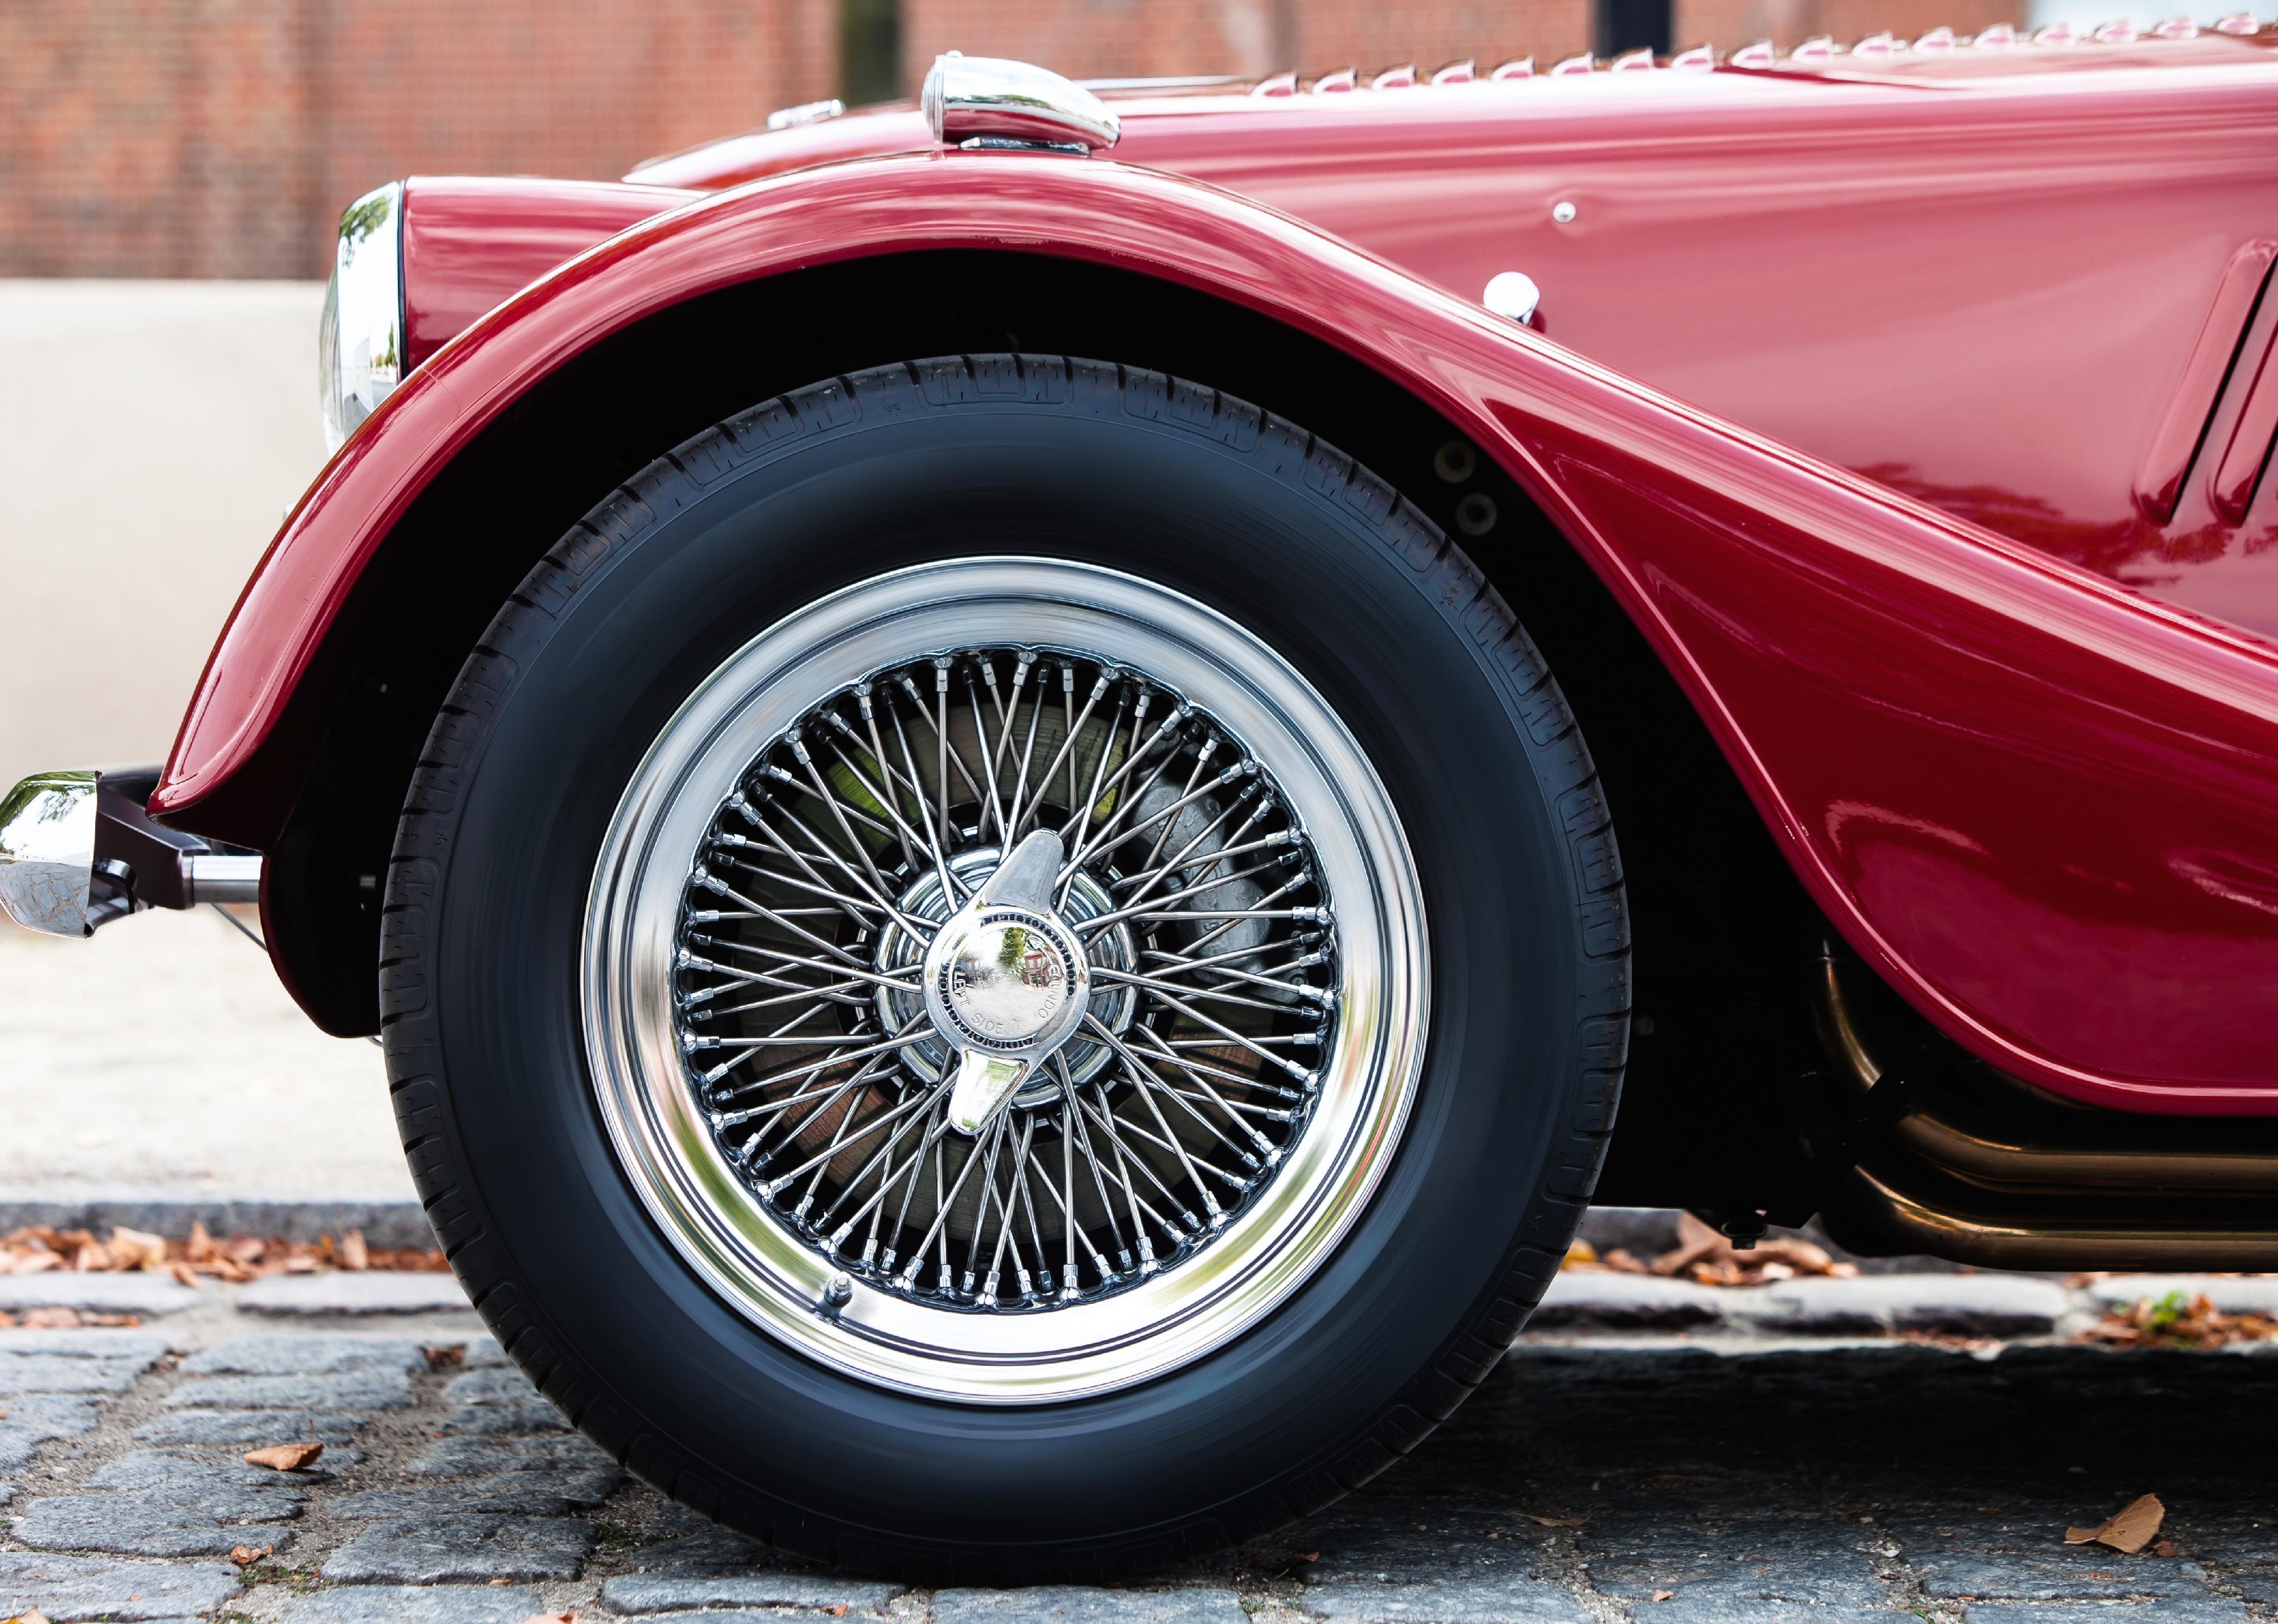 Vintage red car's wheel